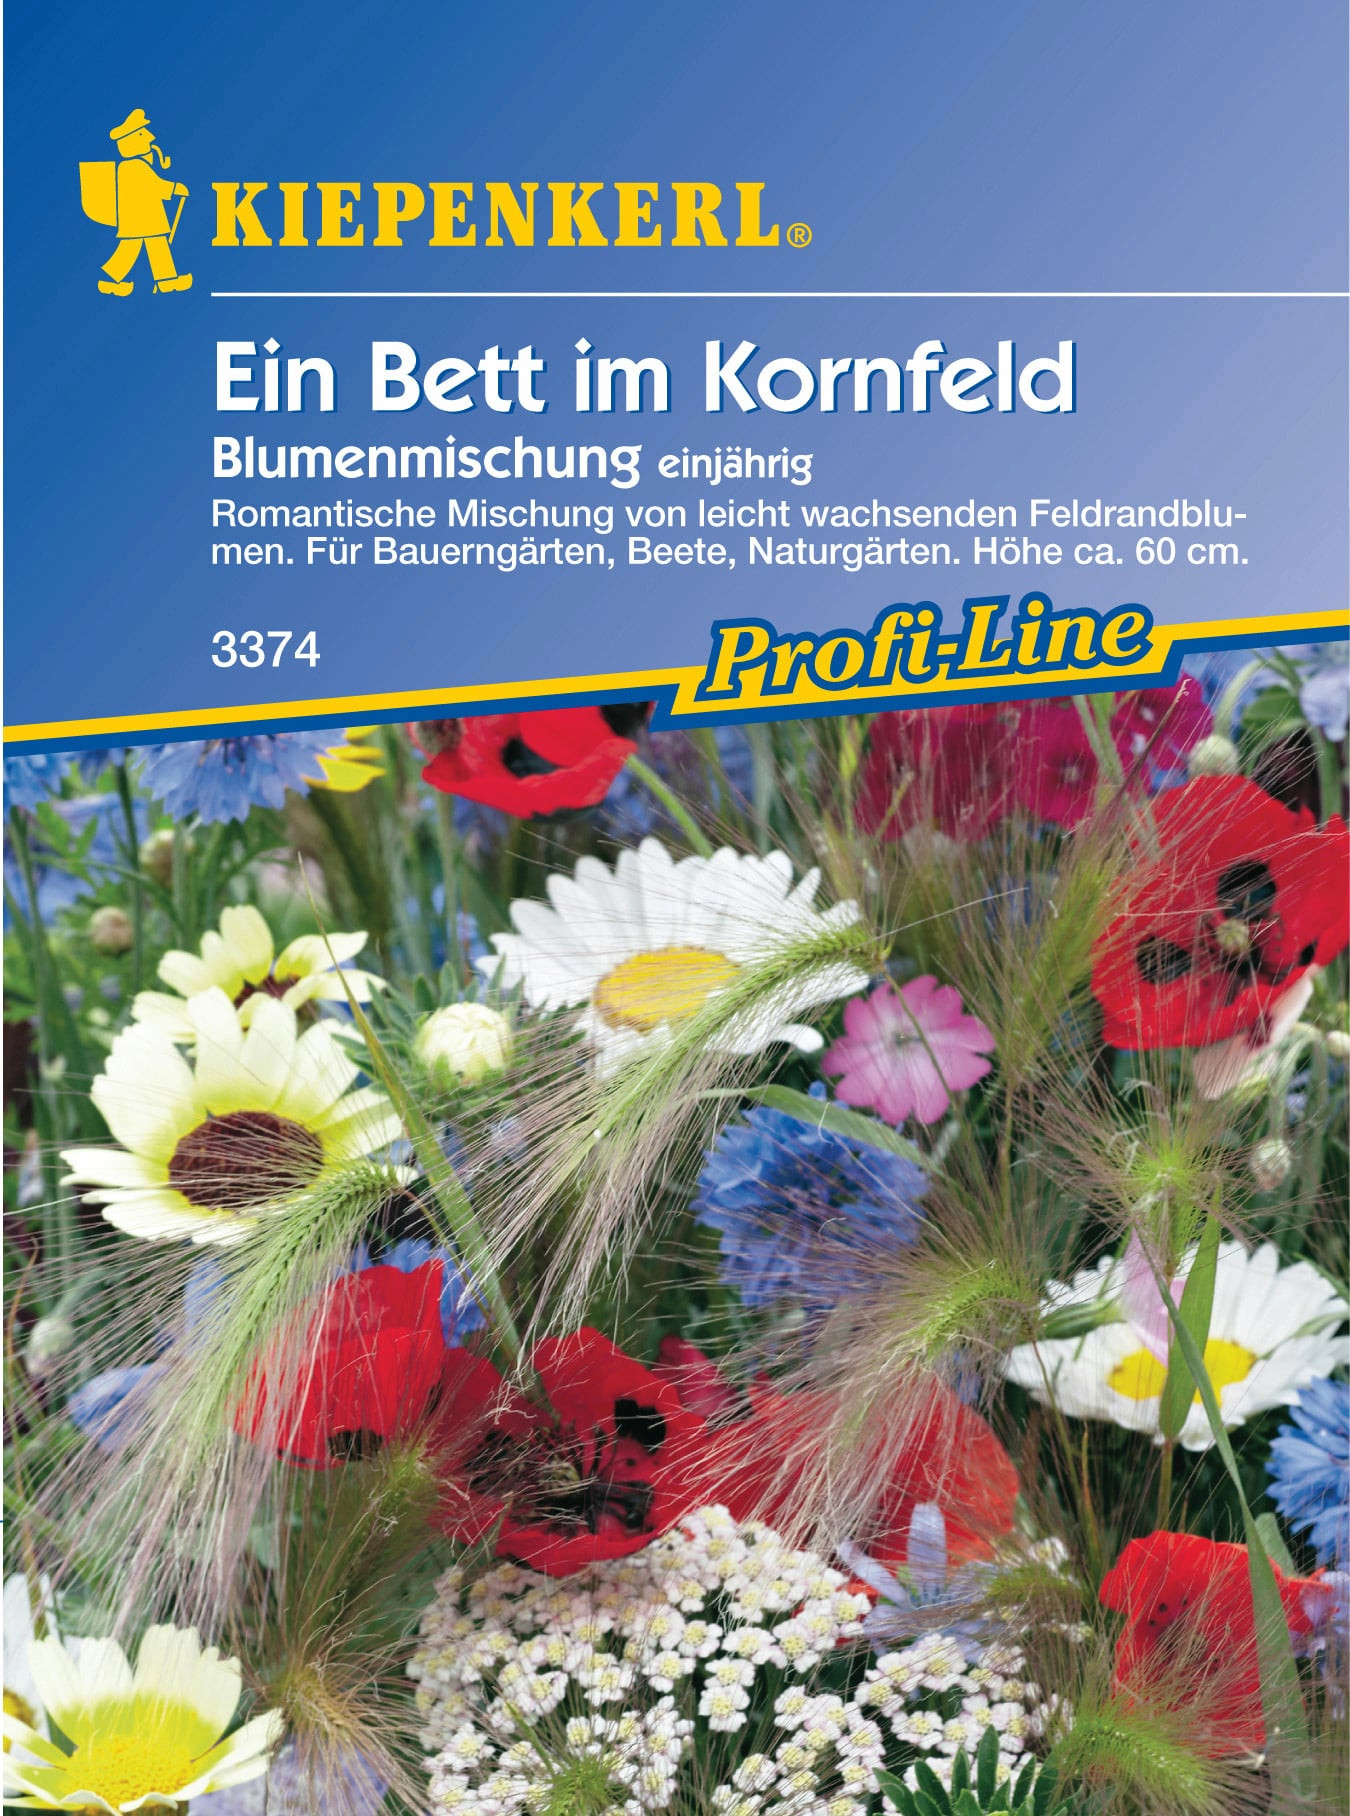 Ein Bett Im Kornfeld
 Kiepenkerl Blumenmischung "Ein Bett im Kornfeld" 1